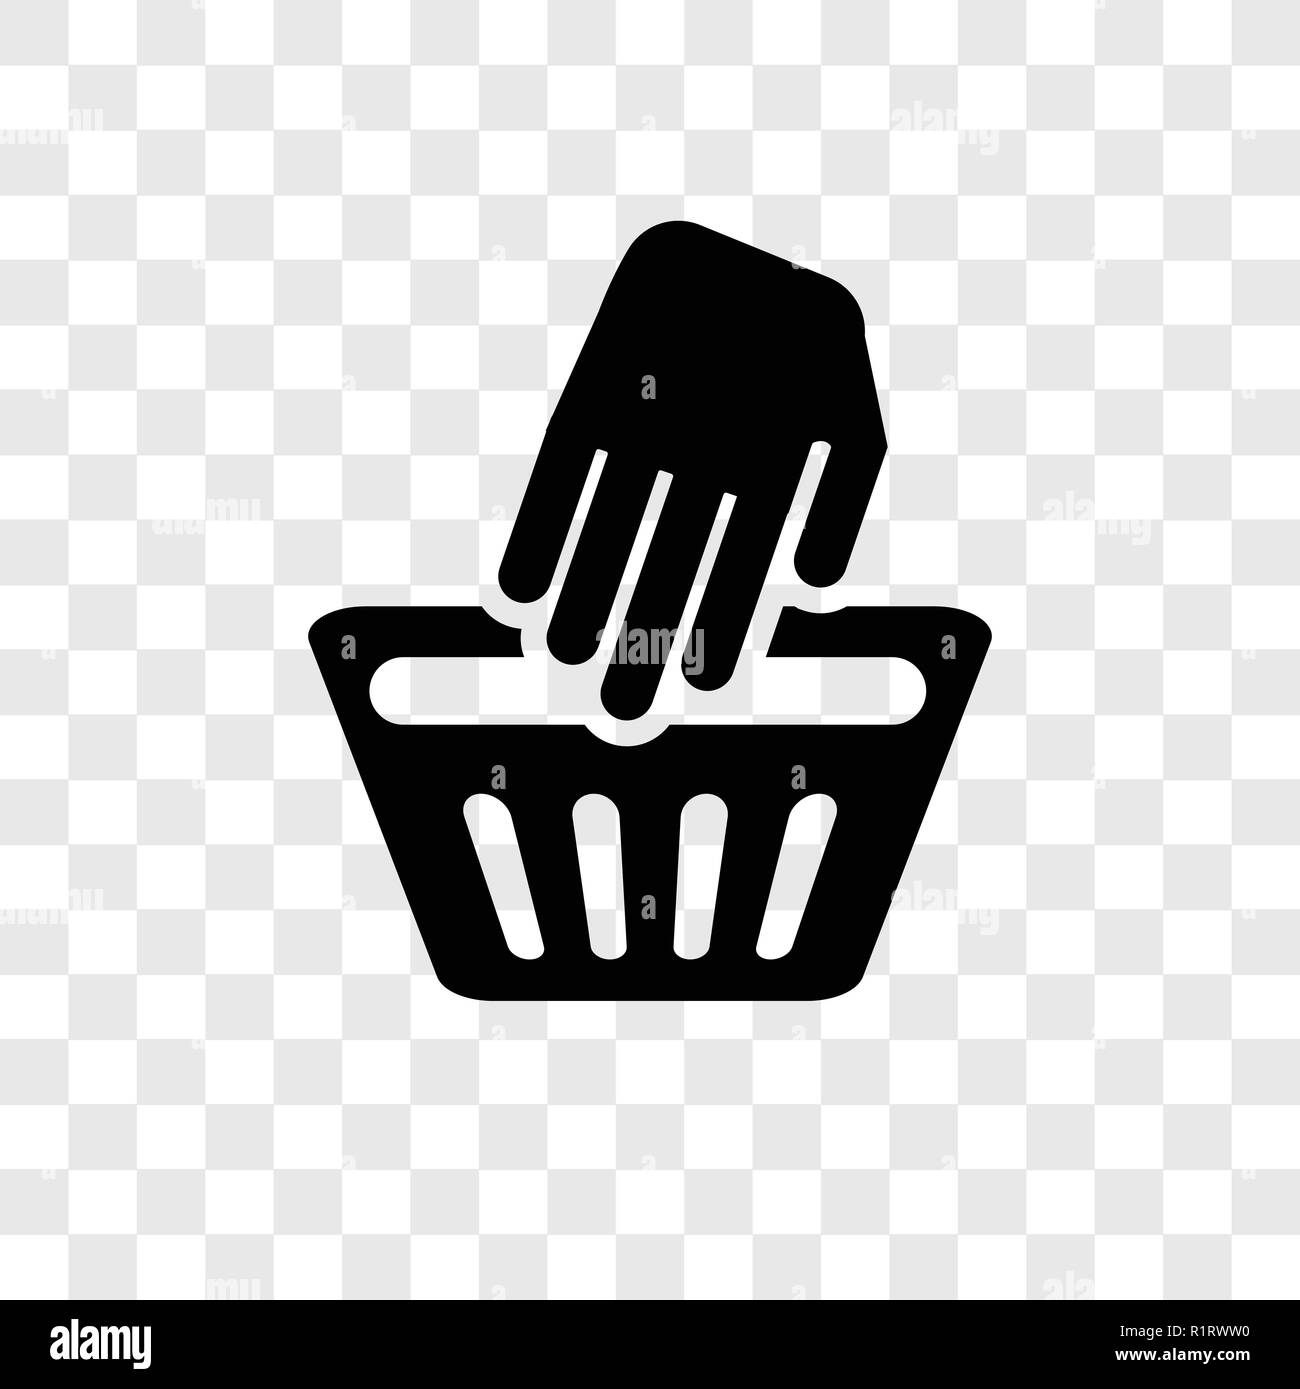 Lavar a mano icono vectorial aislado sobre fondo transparente, transparencia concepto logotipo de lavado de manos Imagen Vector de stock -